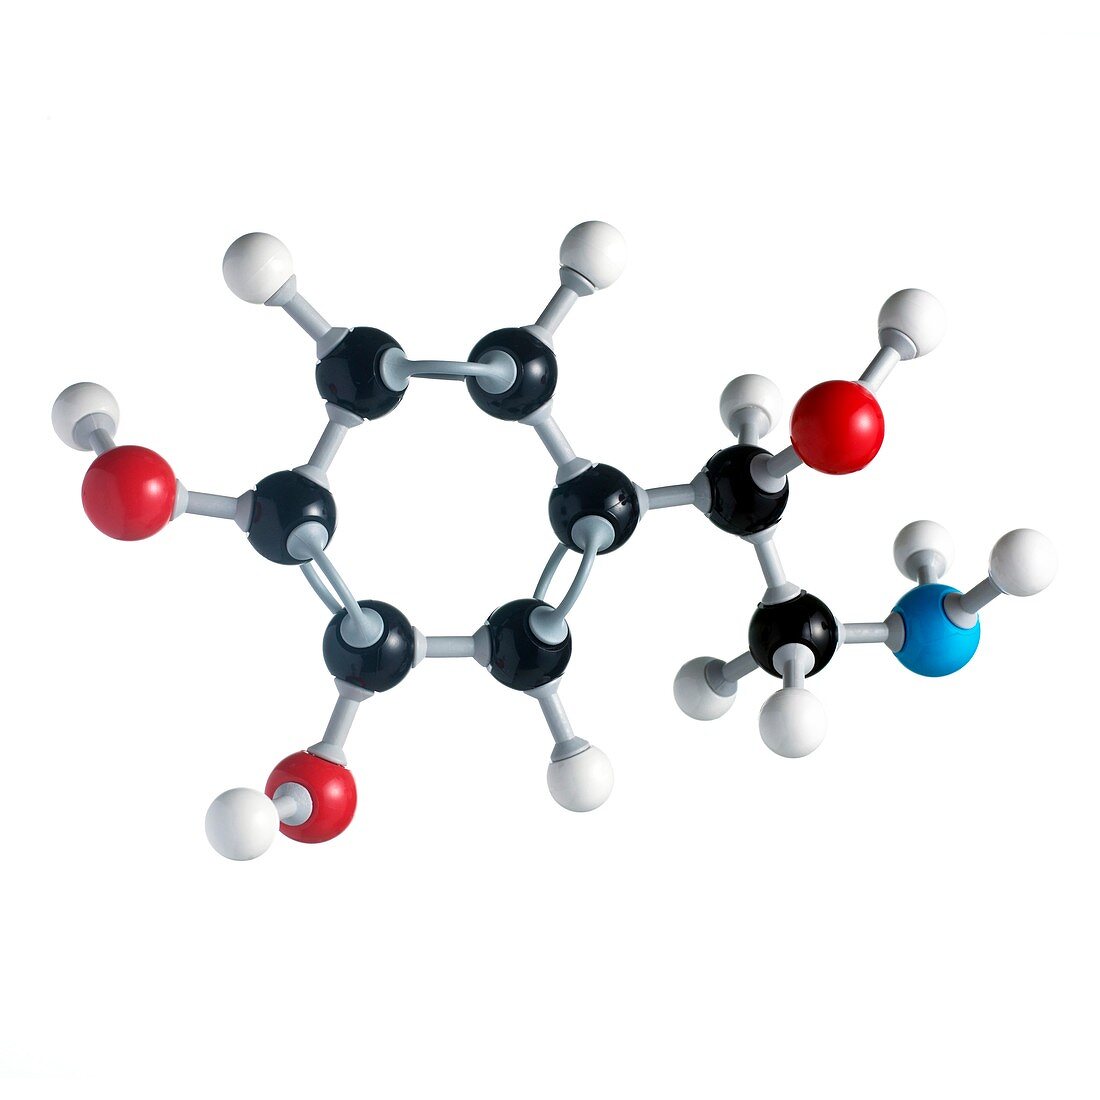 Noradrenaline molecule